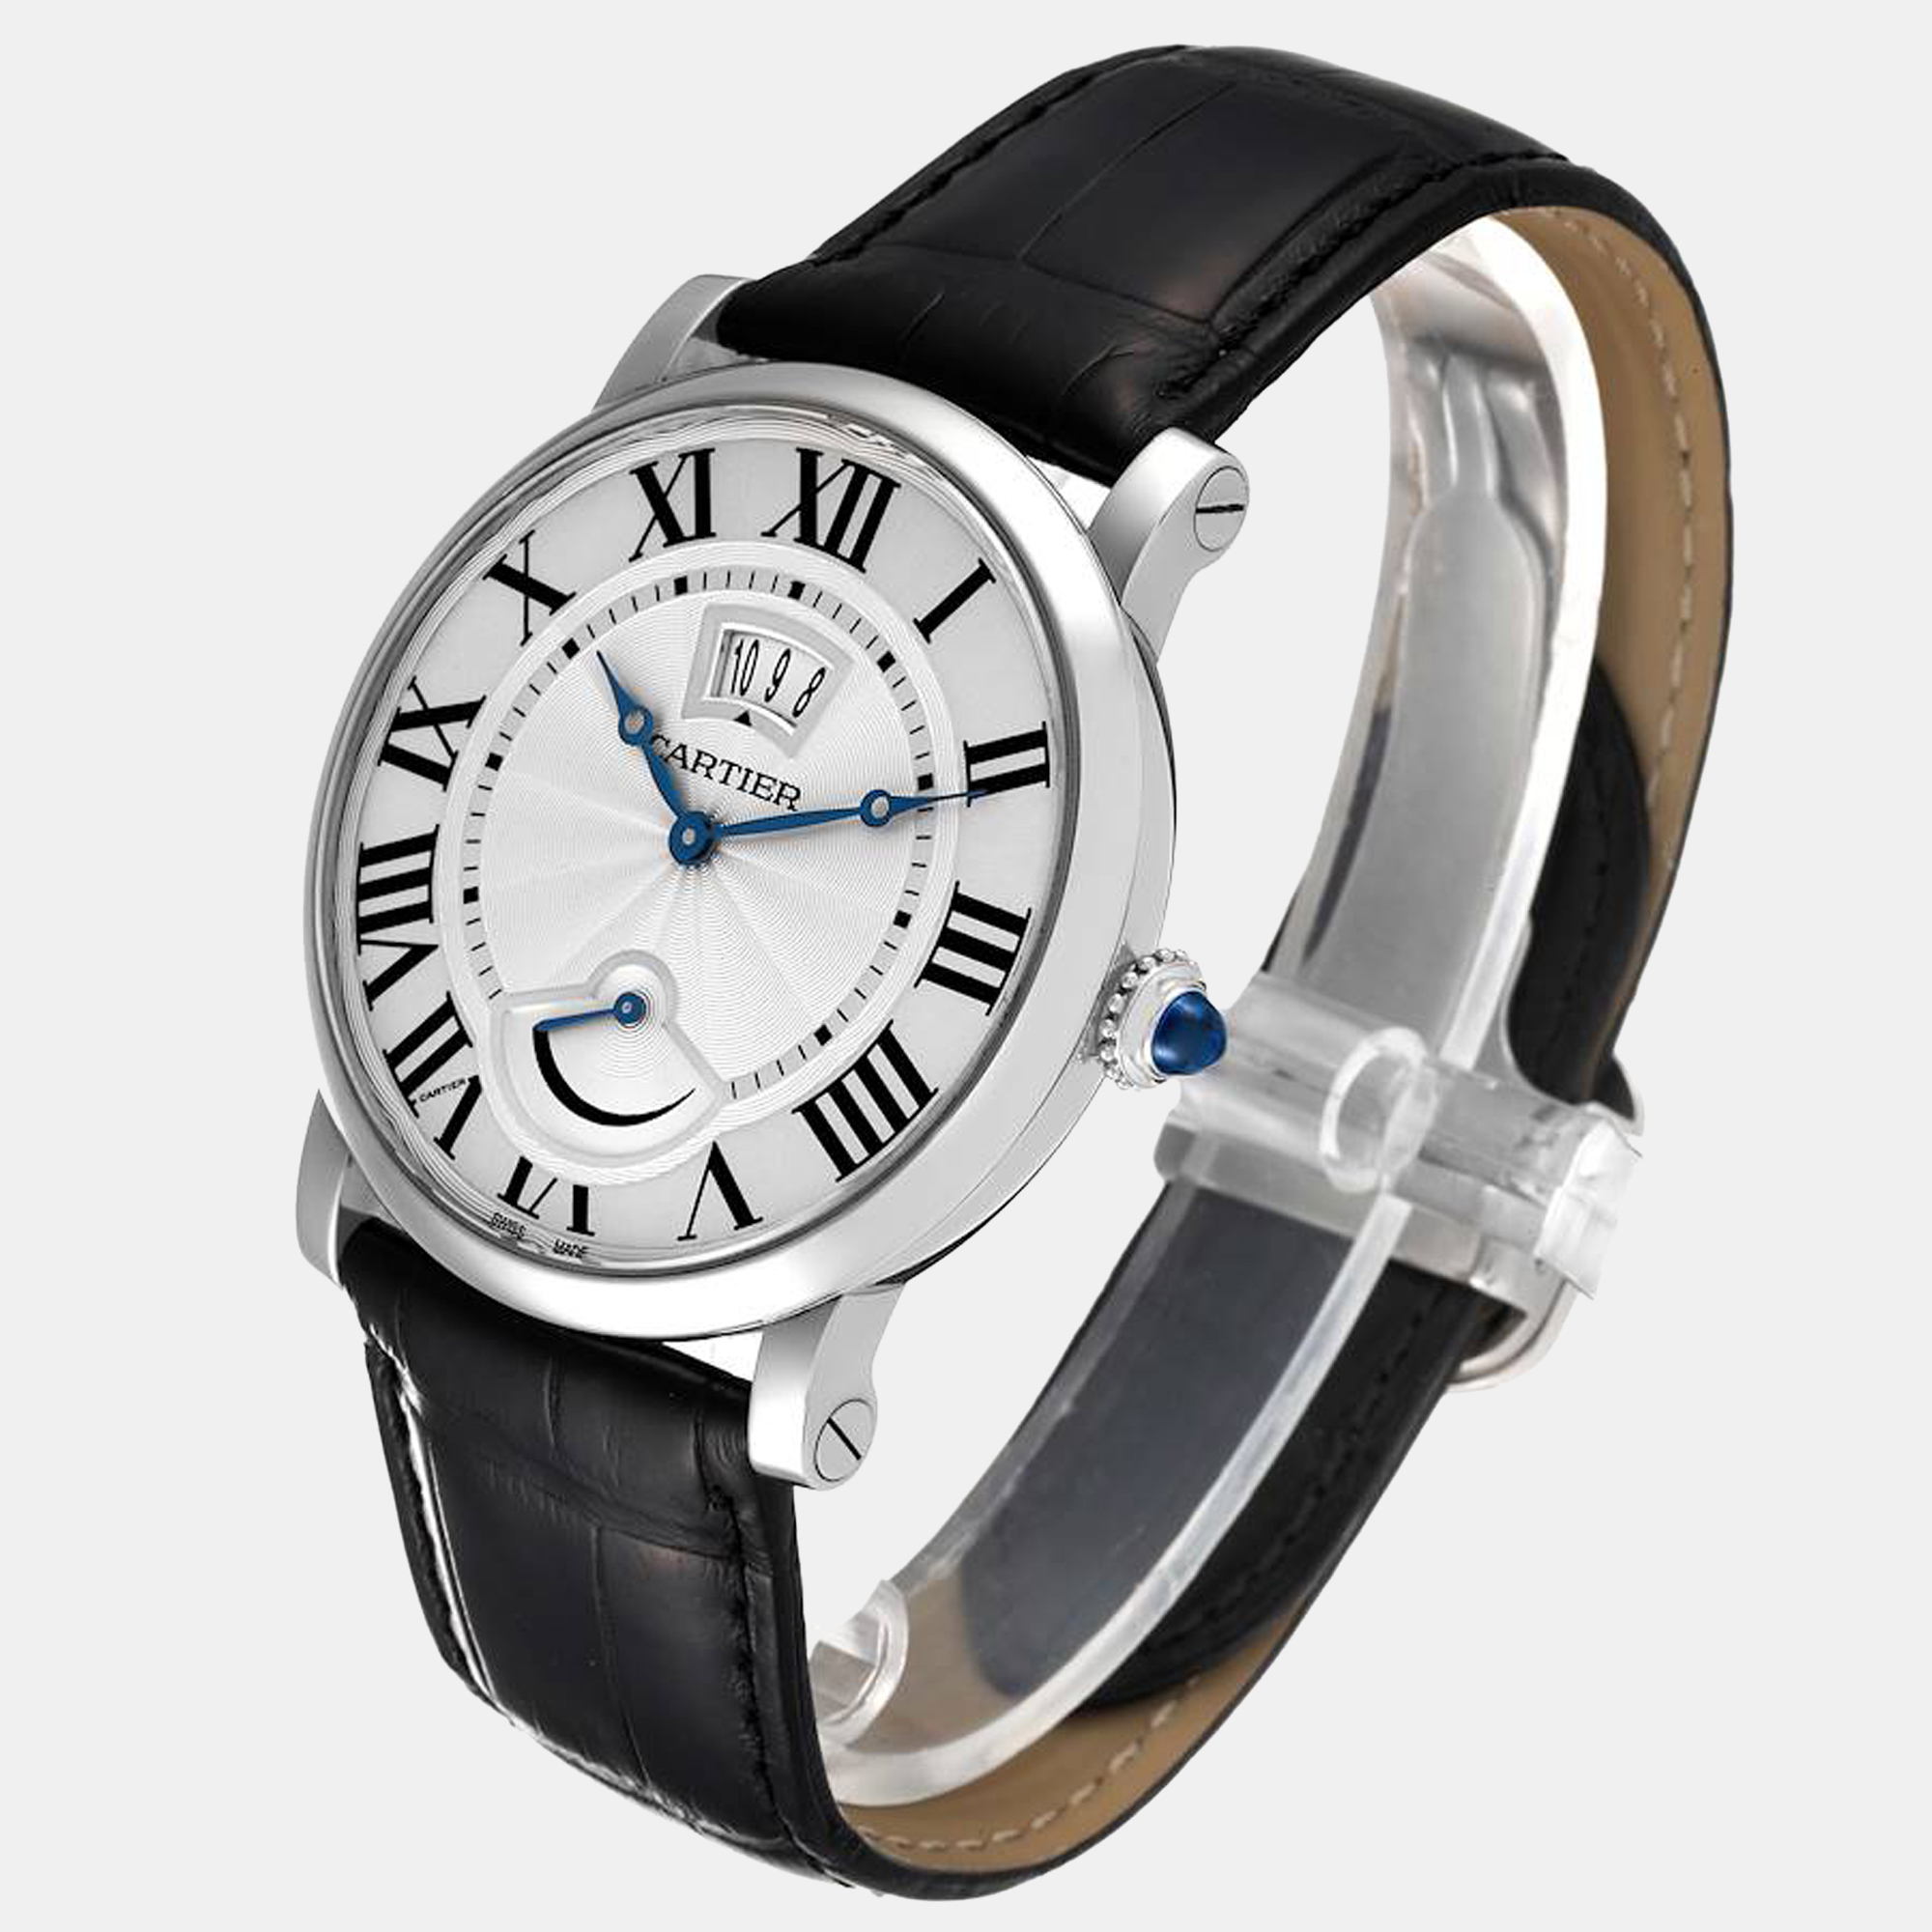 Cartier Silver Stainless Steel Rotonde De Cartier W1556369 Manual Winding Men's Wristwatch 40 Mm